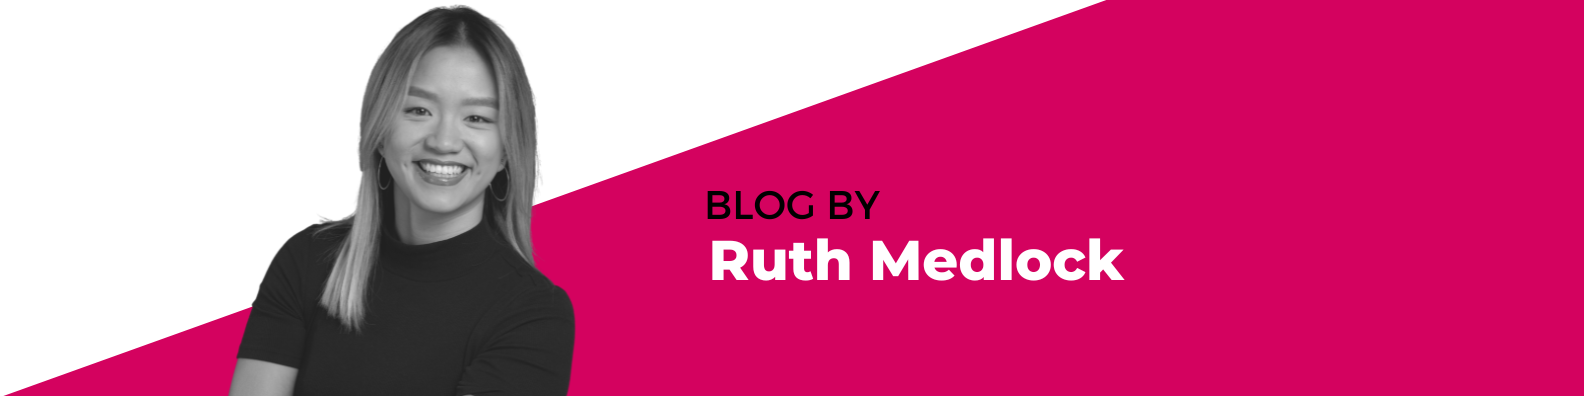 blog by ruth medlock